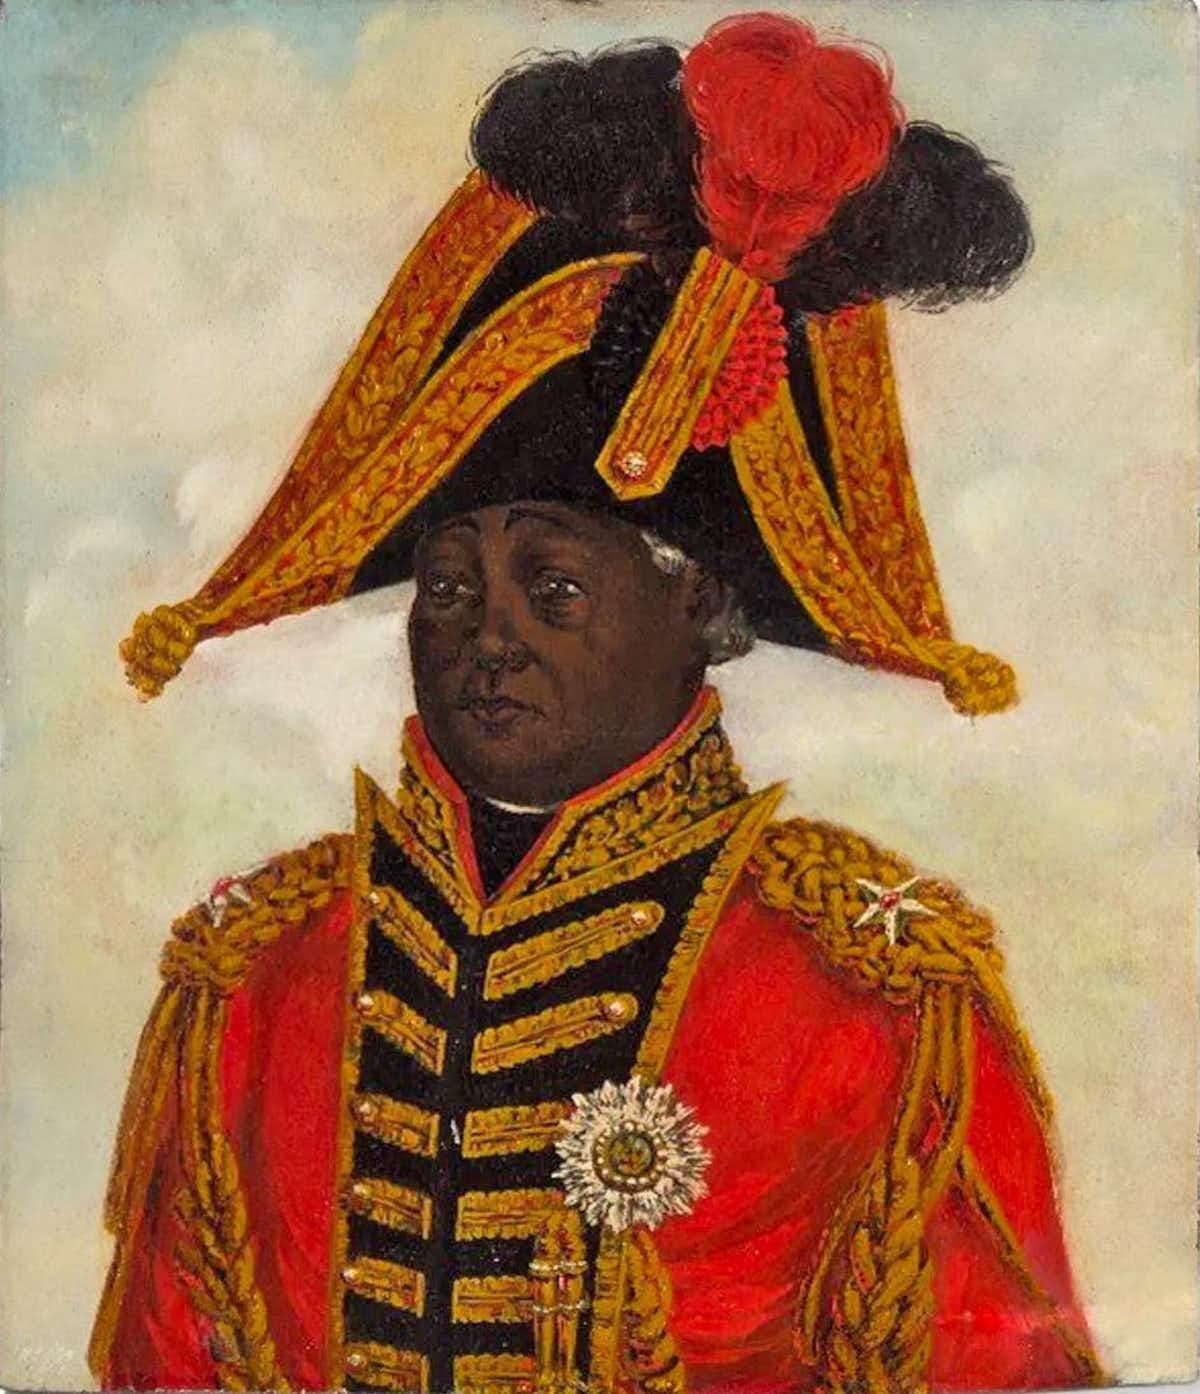 a portrait of Henry I, the former slave who became king.